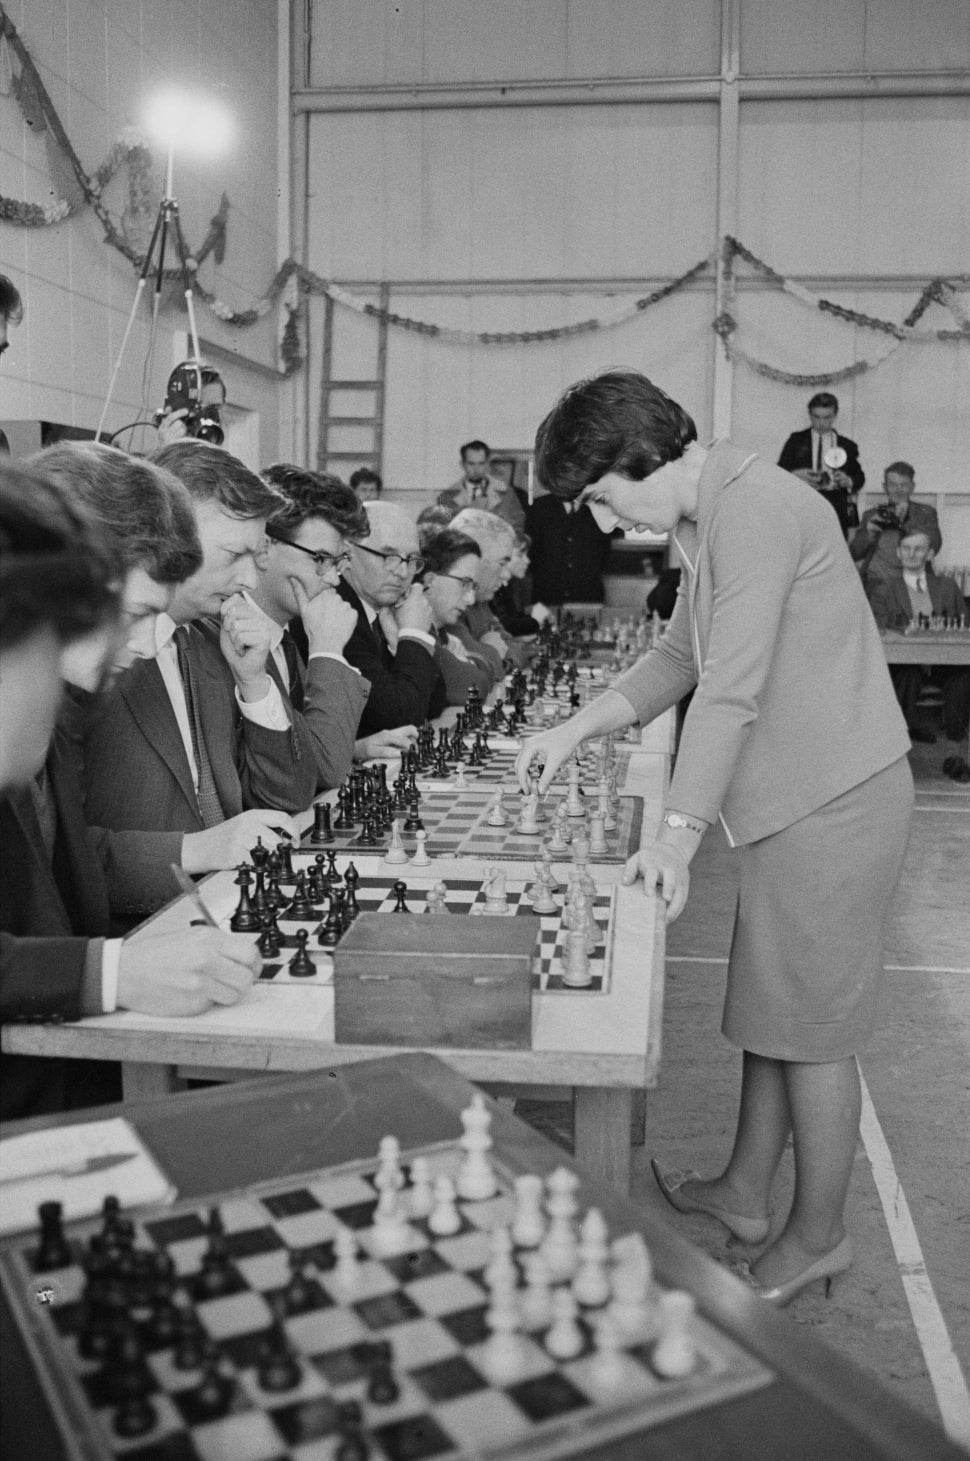 Georgian chess player Nona Gaprindashvili, women's world chess champion, playing against 28 men at once in Dorset, UK, 11th January 1965.